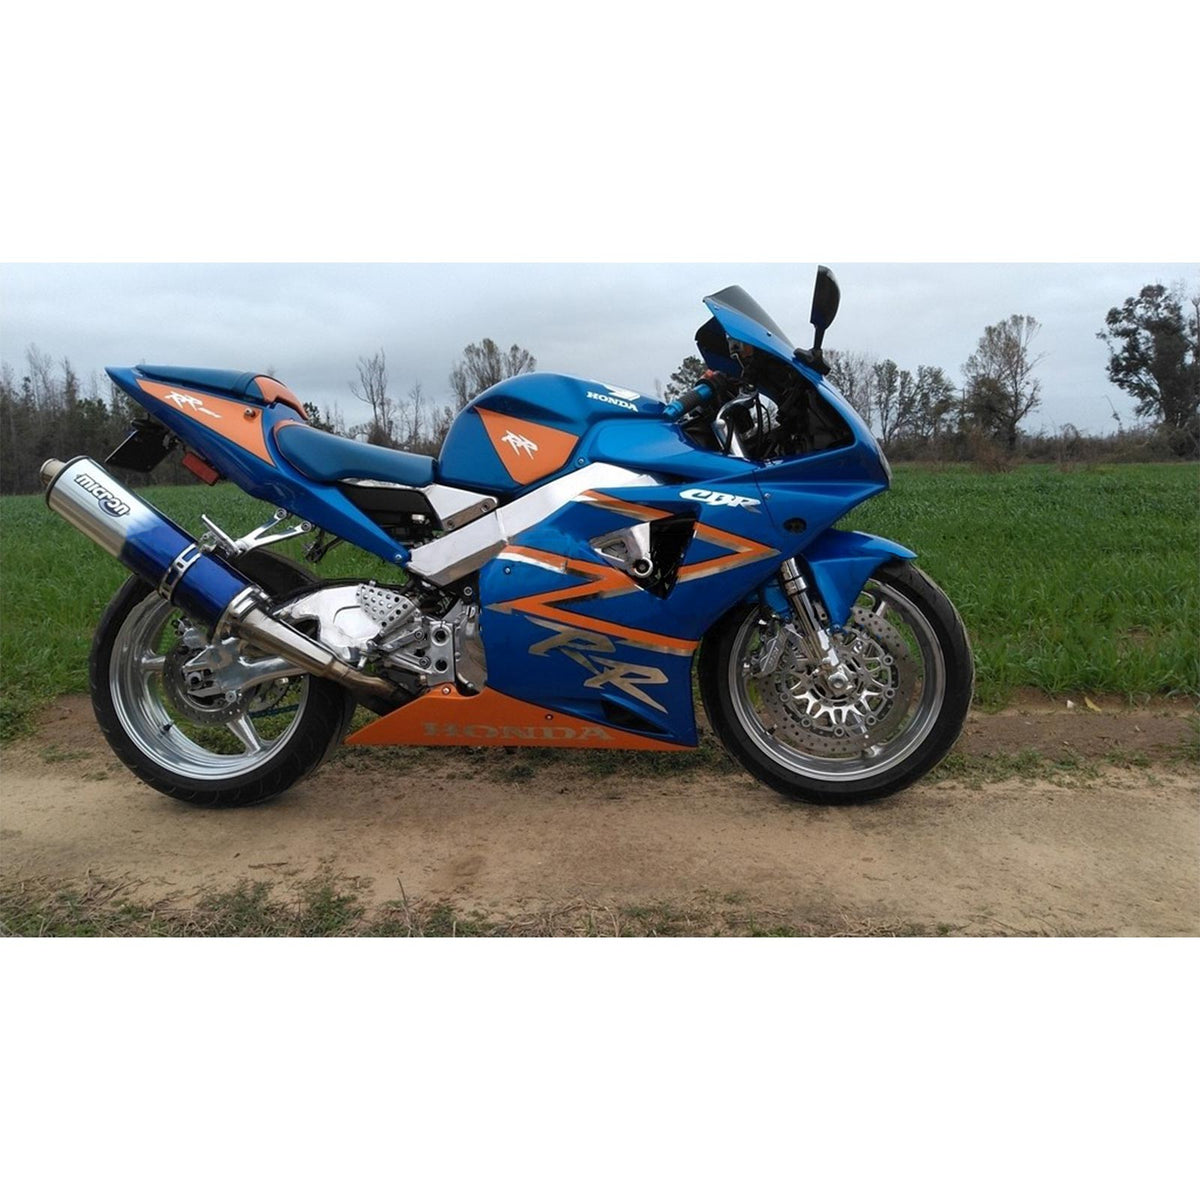 Kit carena Amotopart Honda CBR954 2002-2003 blu e arancione